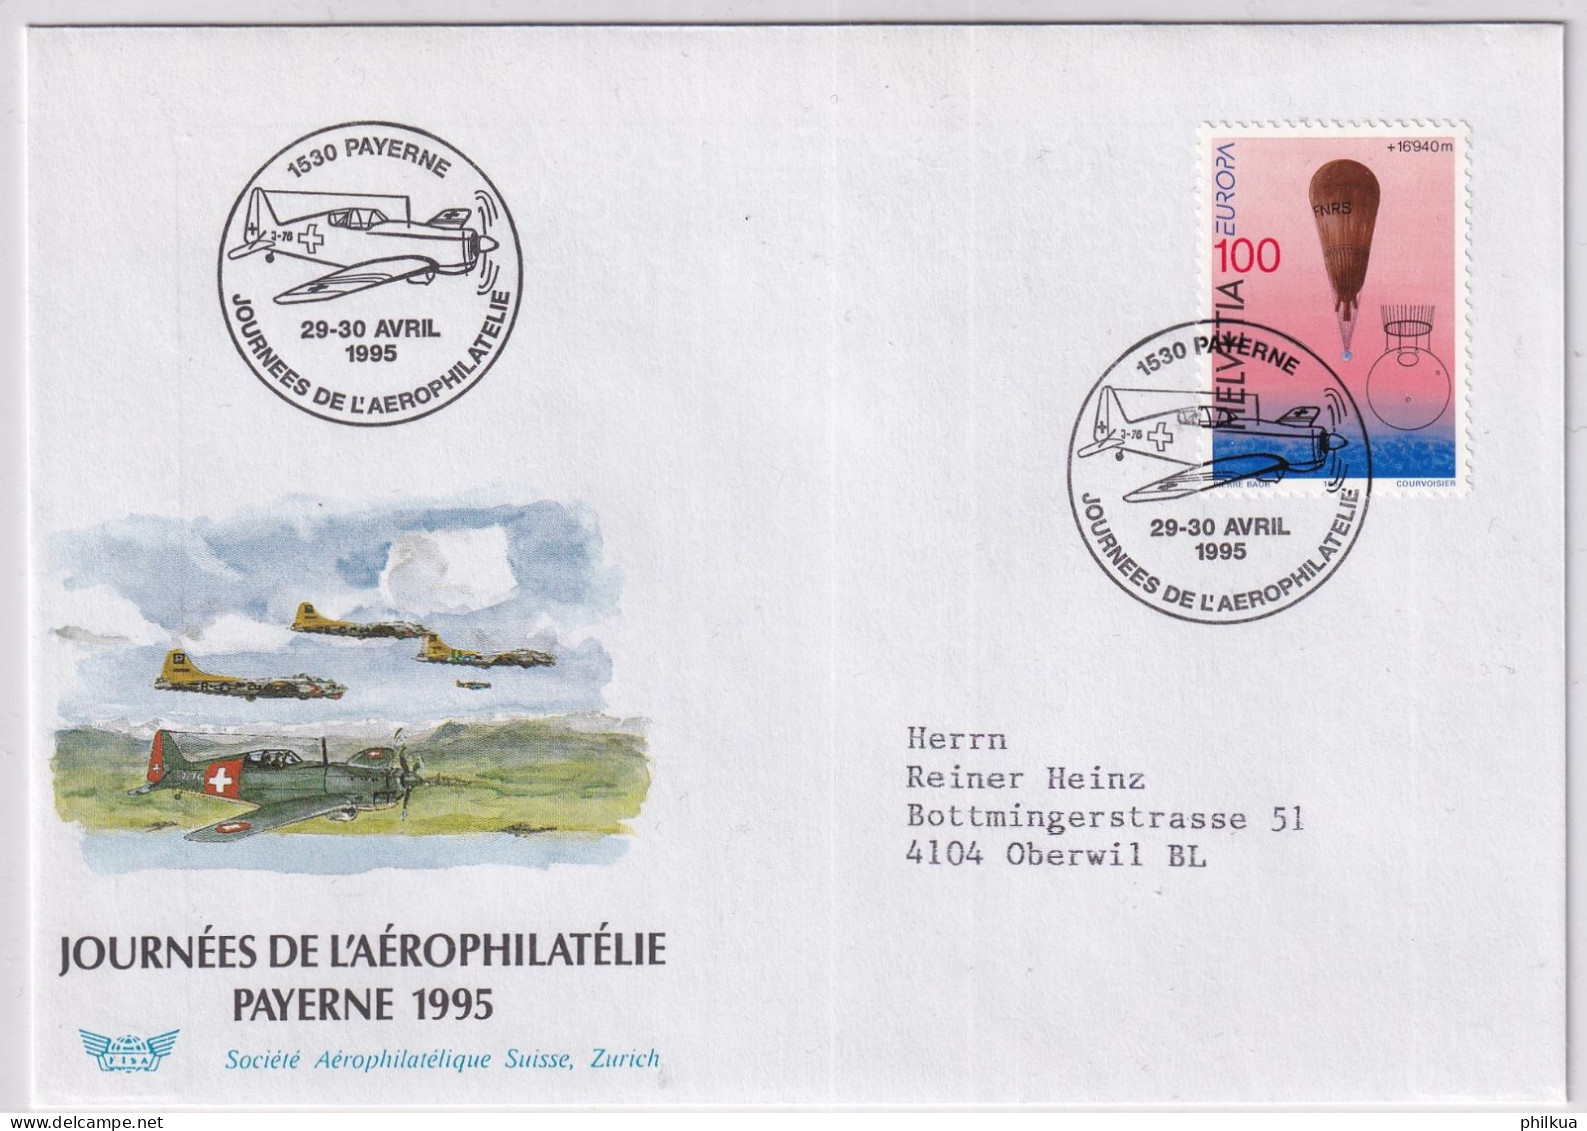 Sonderstempel TAG DER AEROPHILATELIE - PAYERNE Illustrierter Beleg Mit Passender Marke - JOURNÉES DE L'AÉROPHILATÉLIE - Postmark Collection